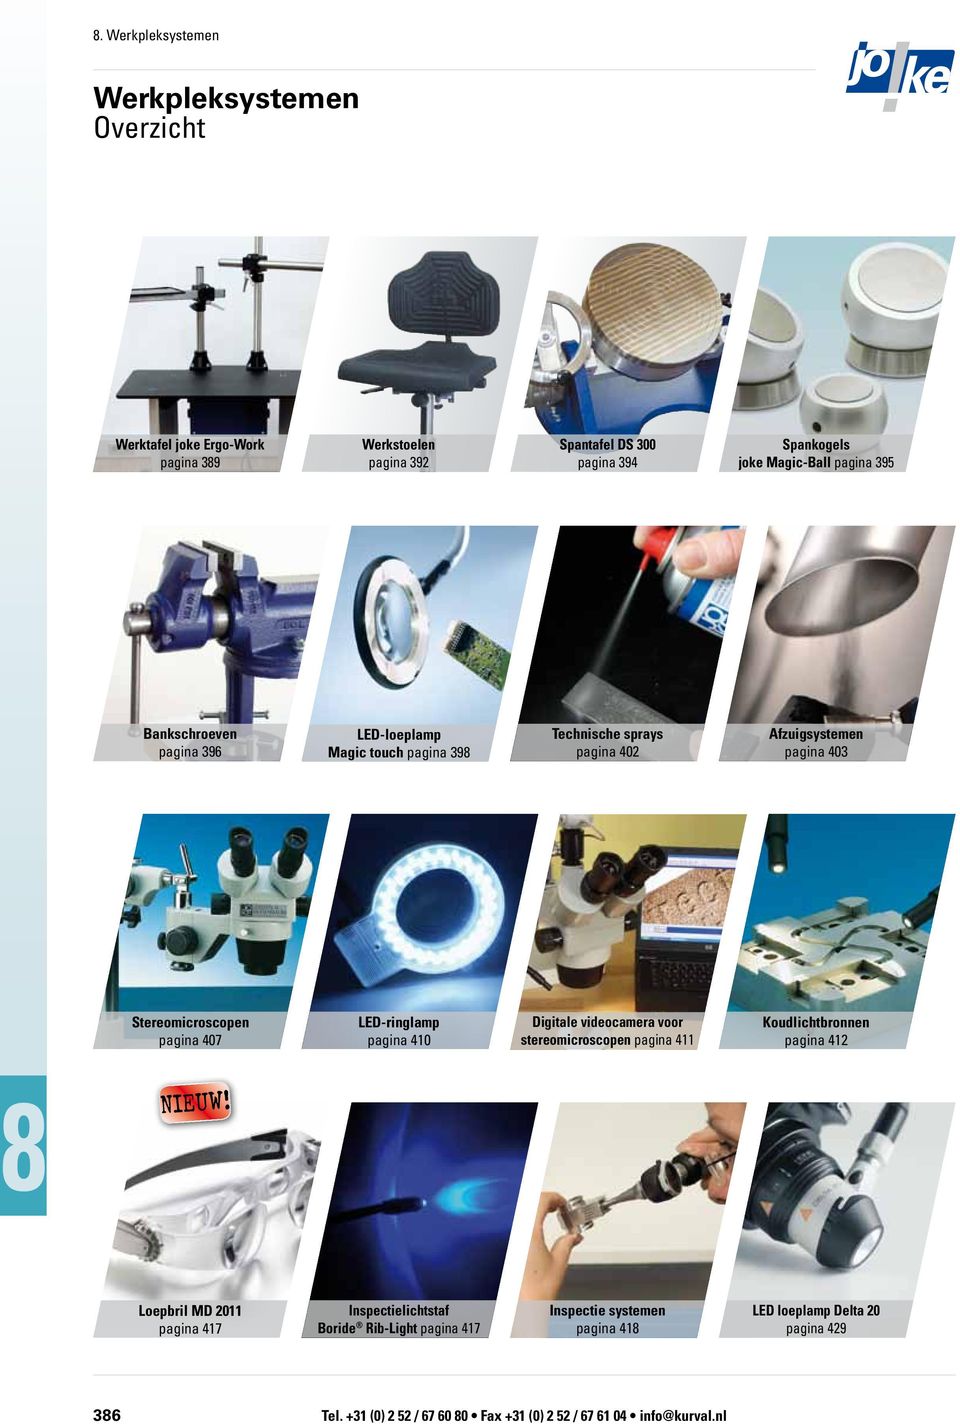 LED-ringlamp pagina 410 Digitale videocamera voor stereomicroscopen pagina 411 Koudlichtbronnen pagina 412 NIEUW!